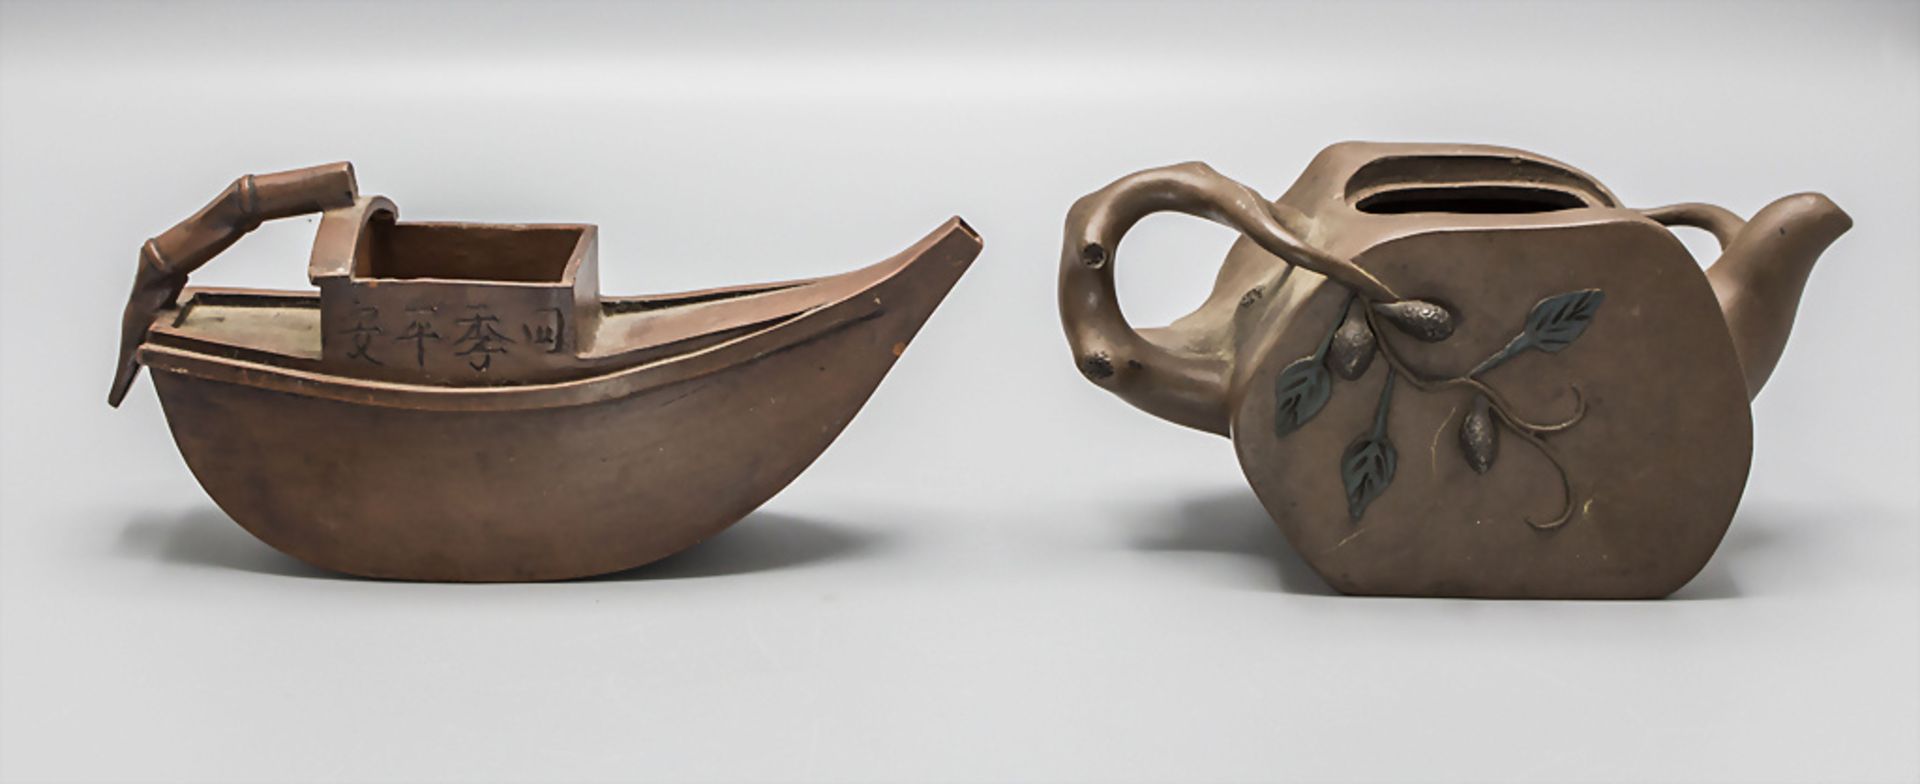 Zwei Teekännchen / Two ceramic teapots, China, 20. Jh. - Image 3 of 10